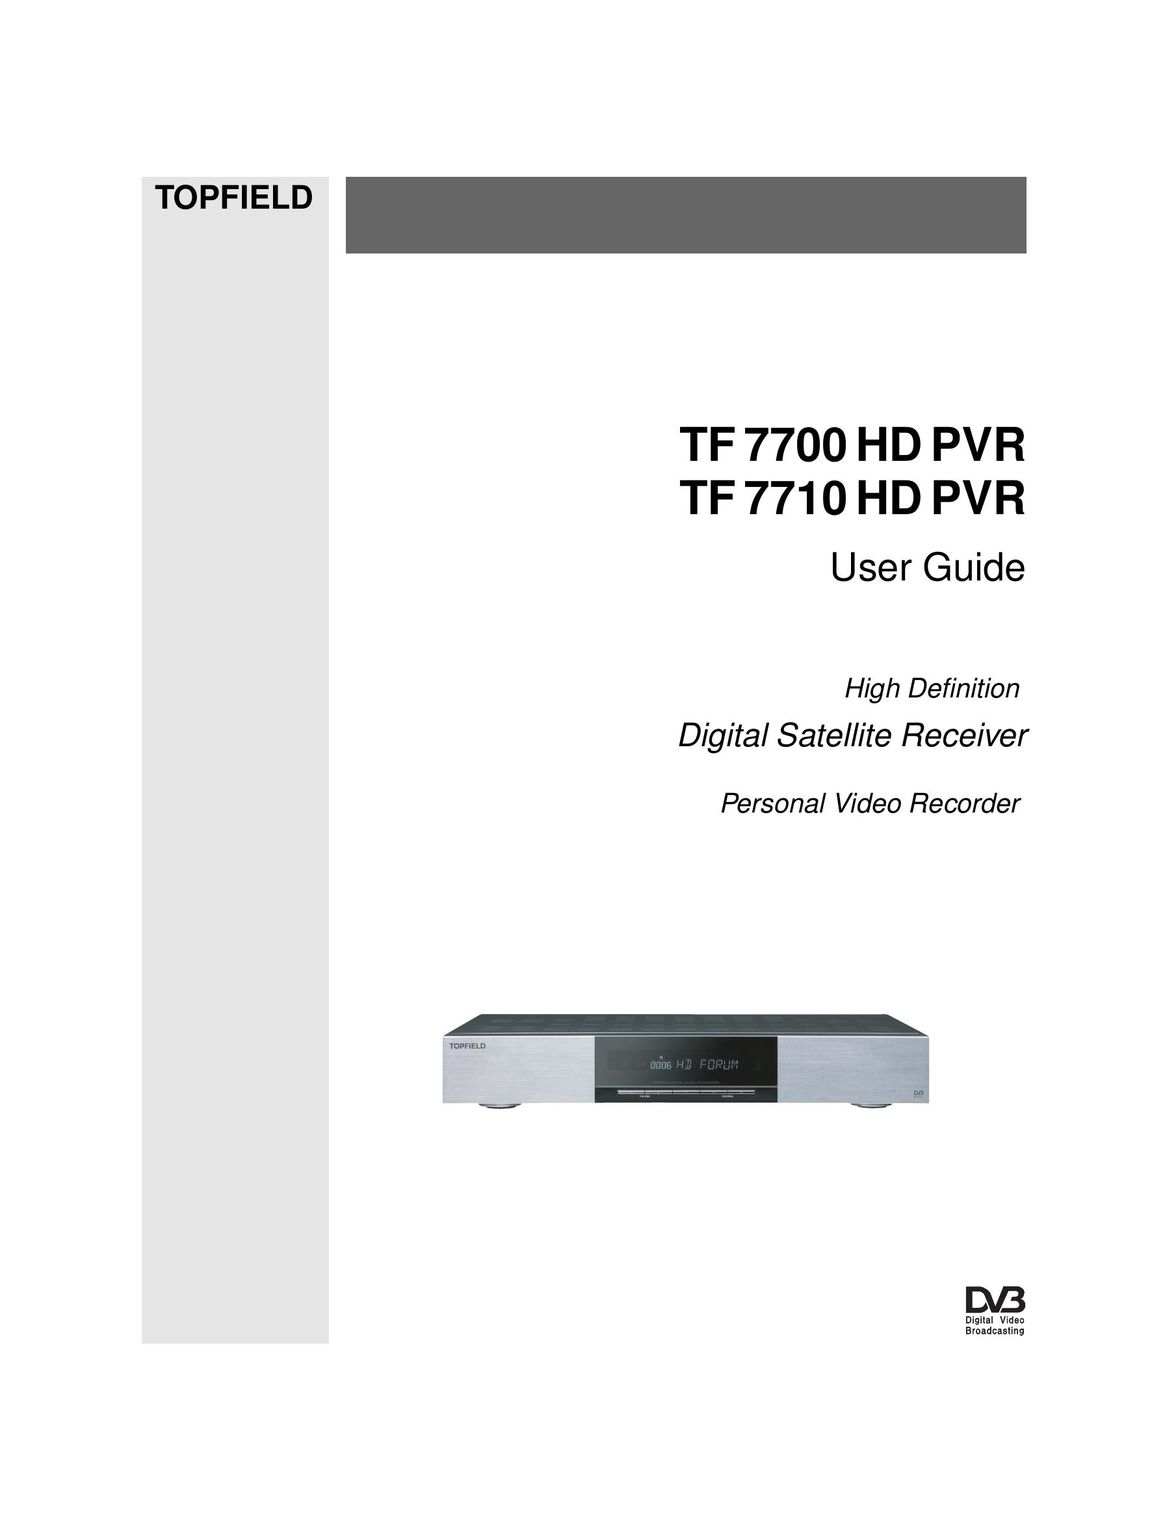 Topfield TF 7700 HD PVR Satellite TV System User Manual